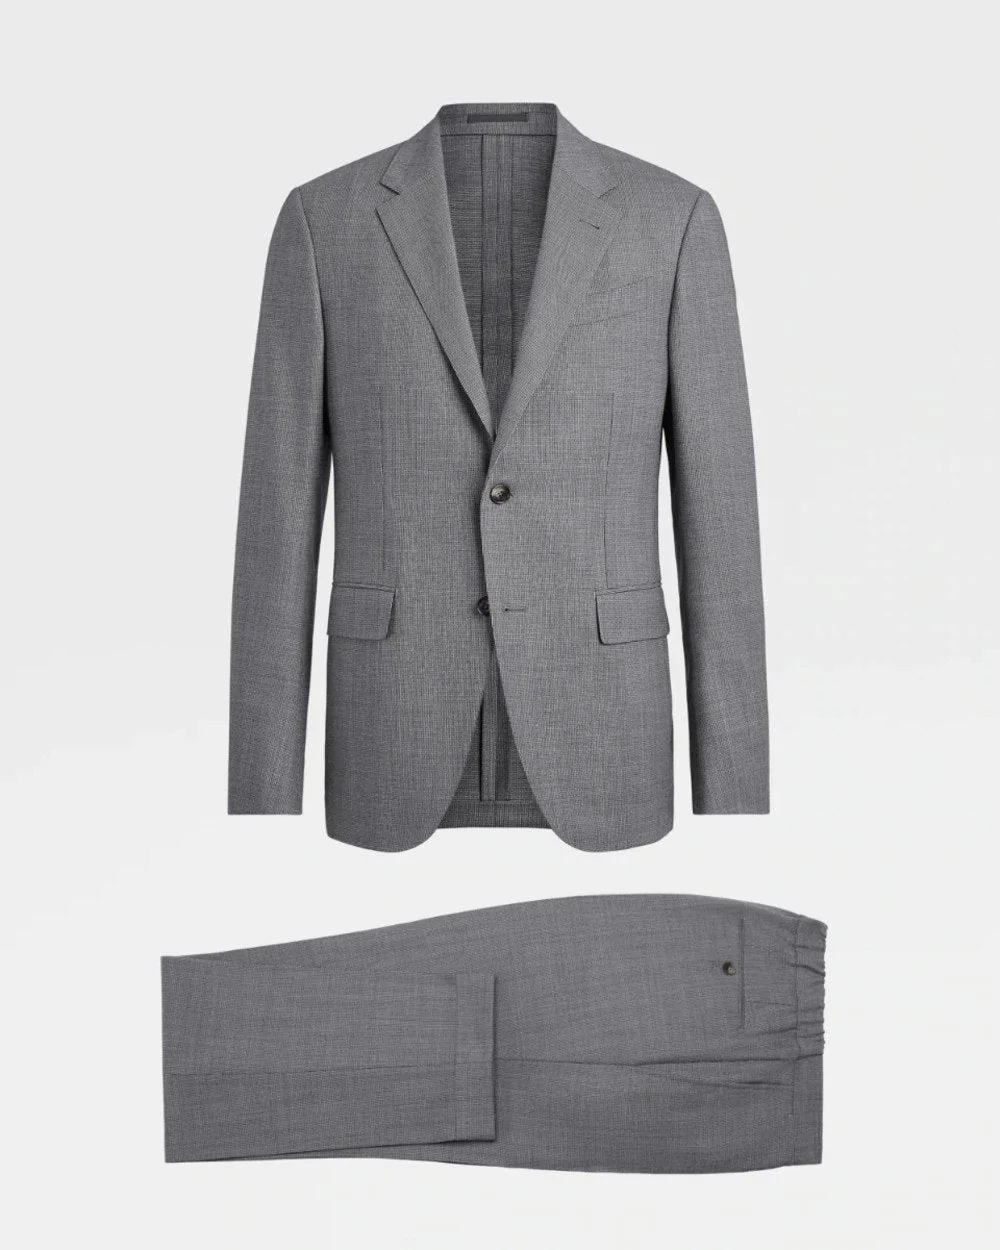 Ermenegildo Zegna Men's Gray houndstooth Two-Piece Suit